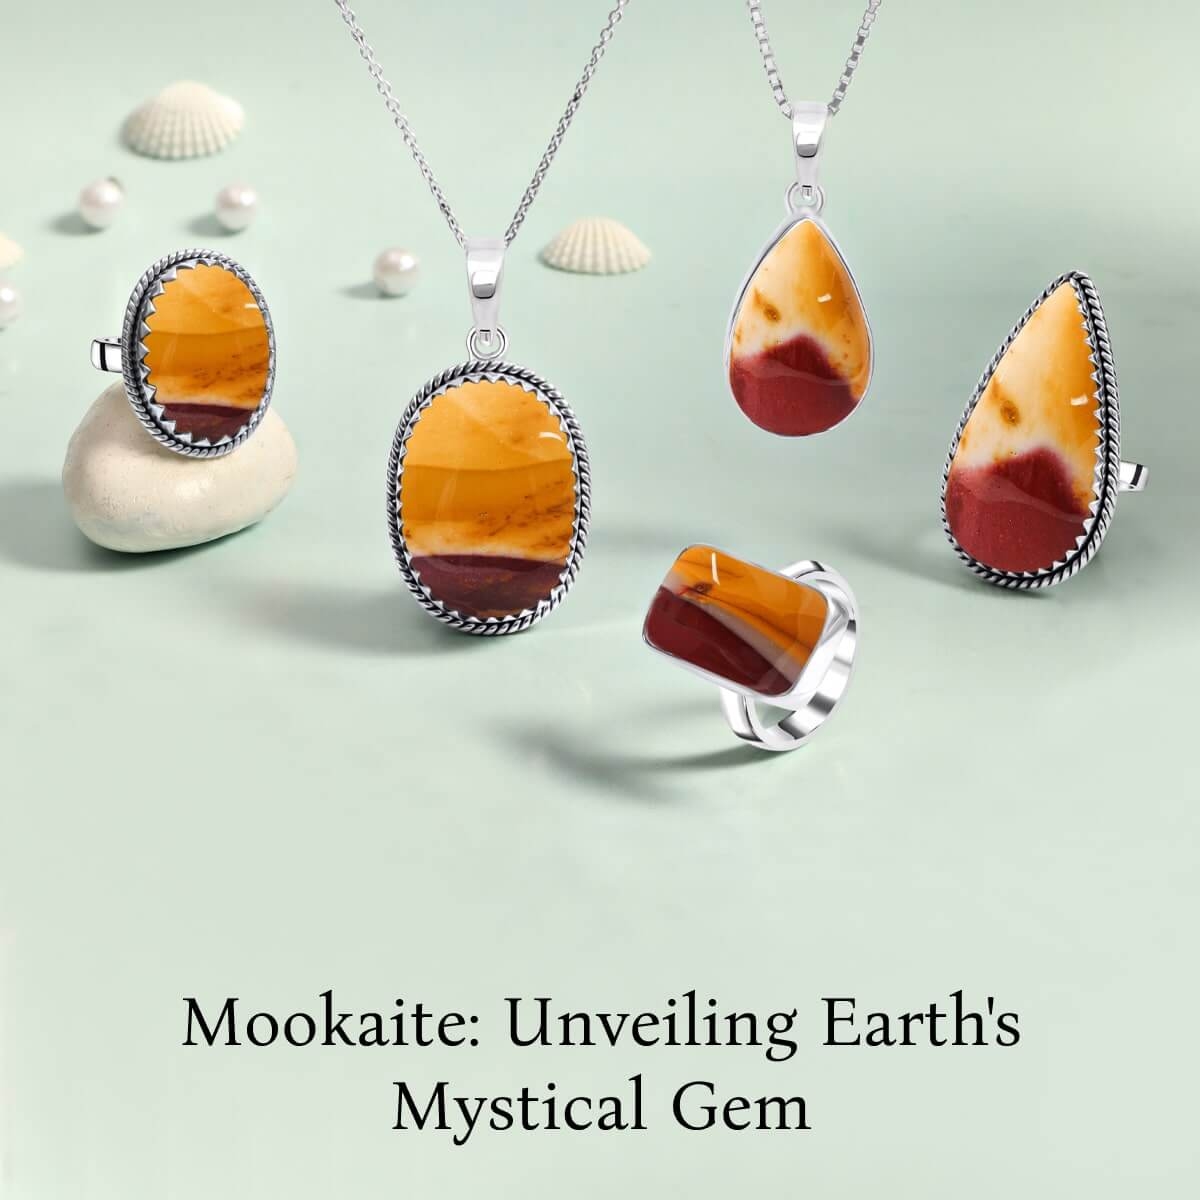 Mookaite Gemstone Meaning